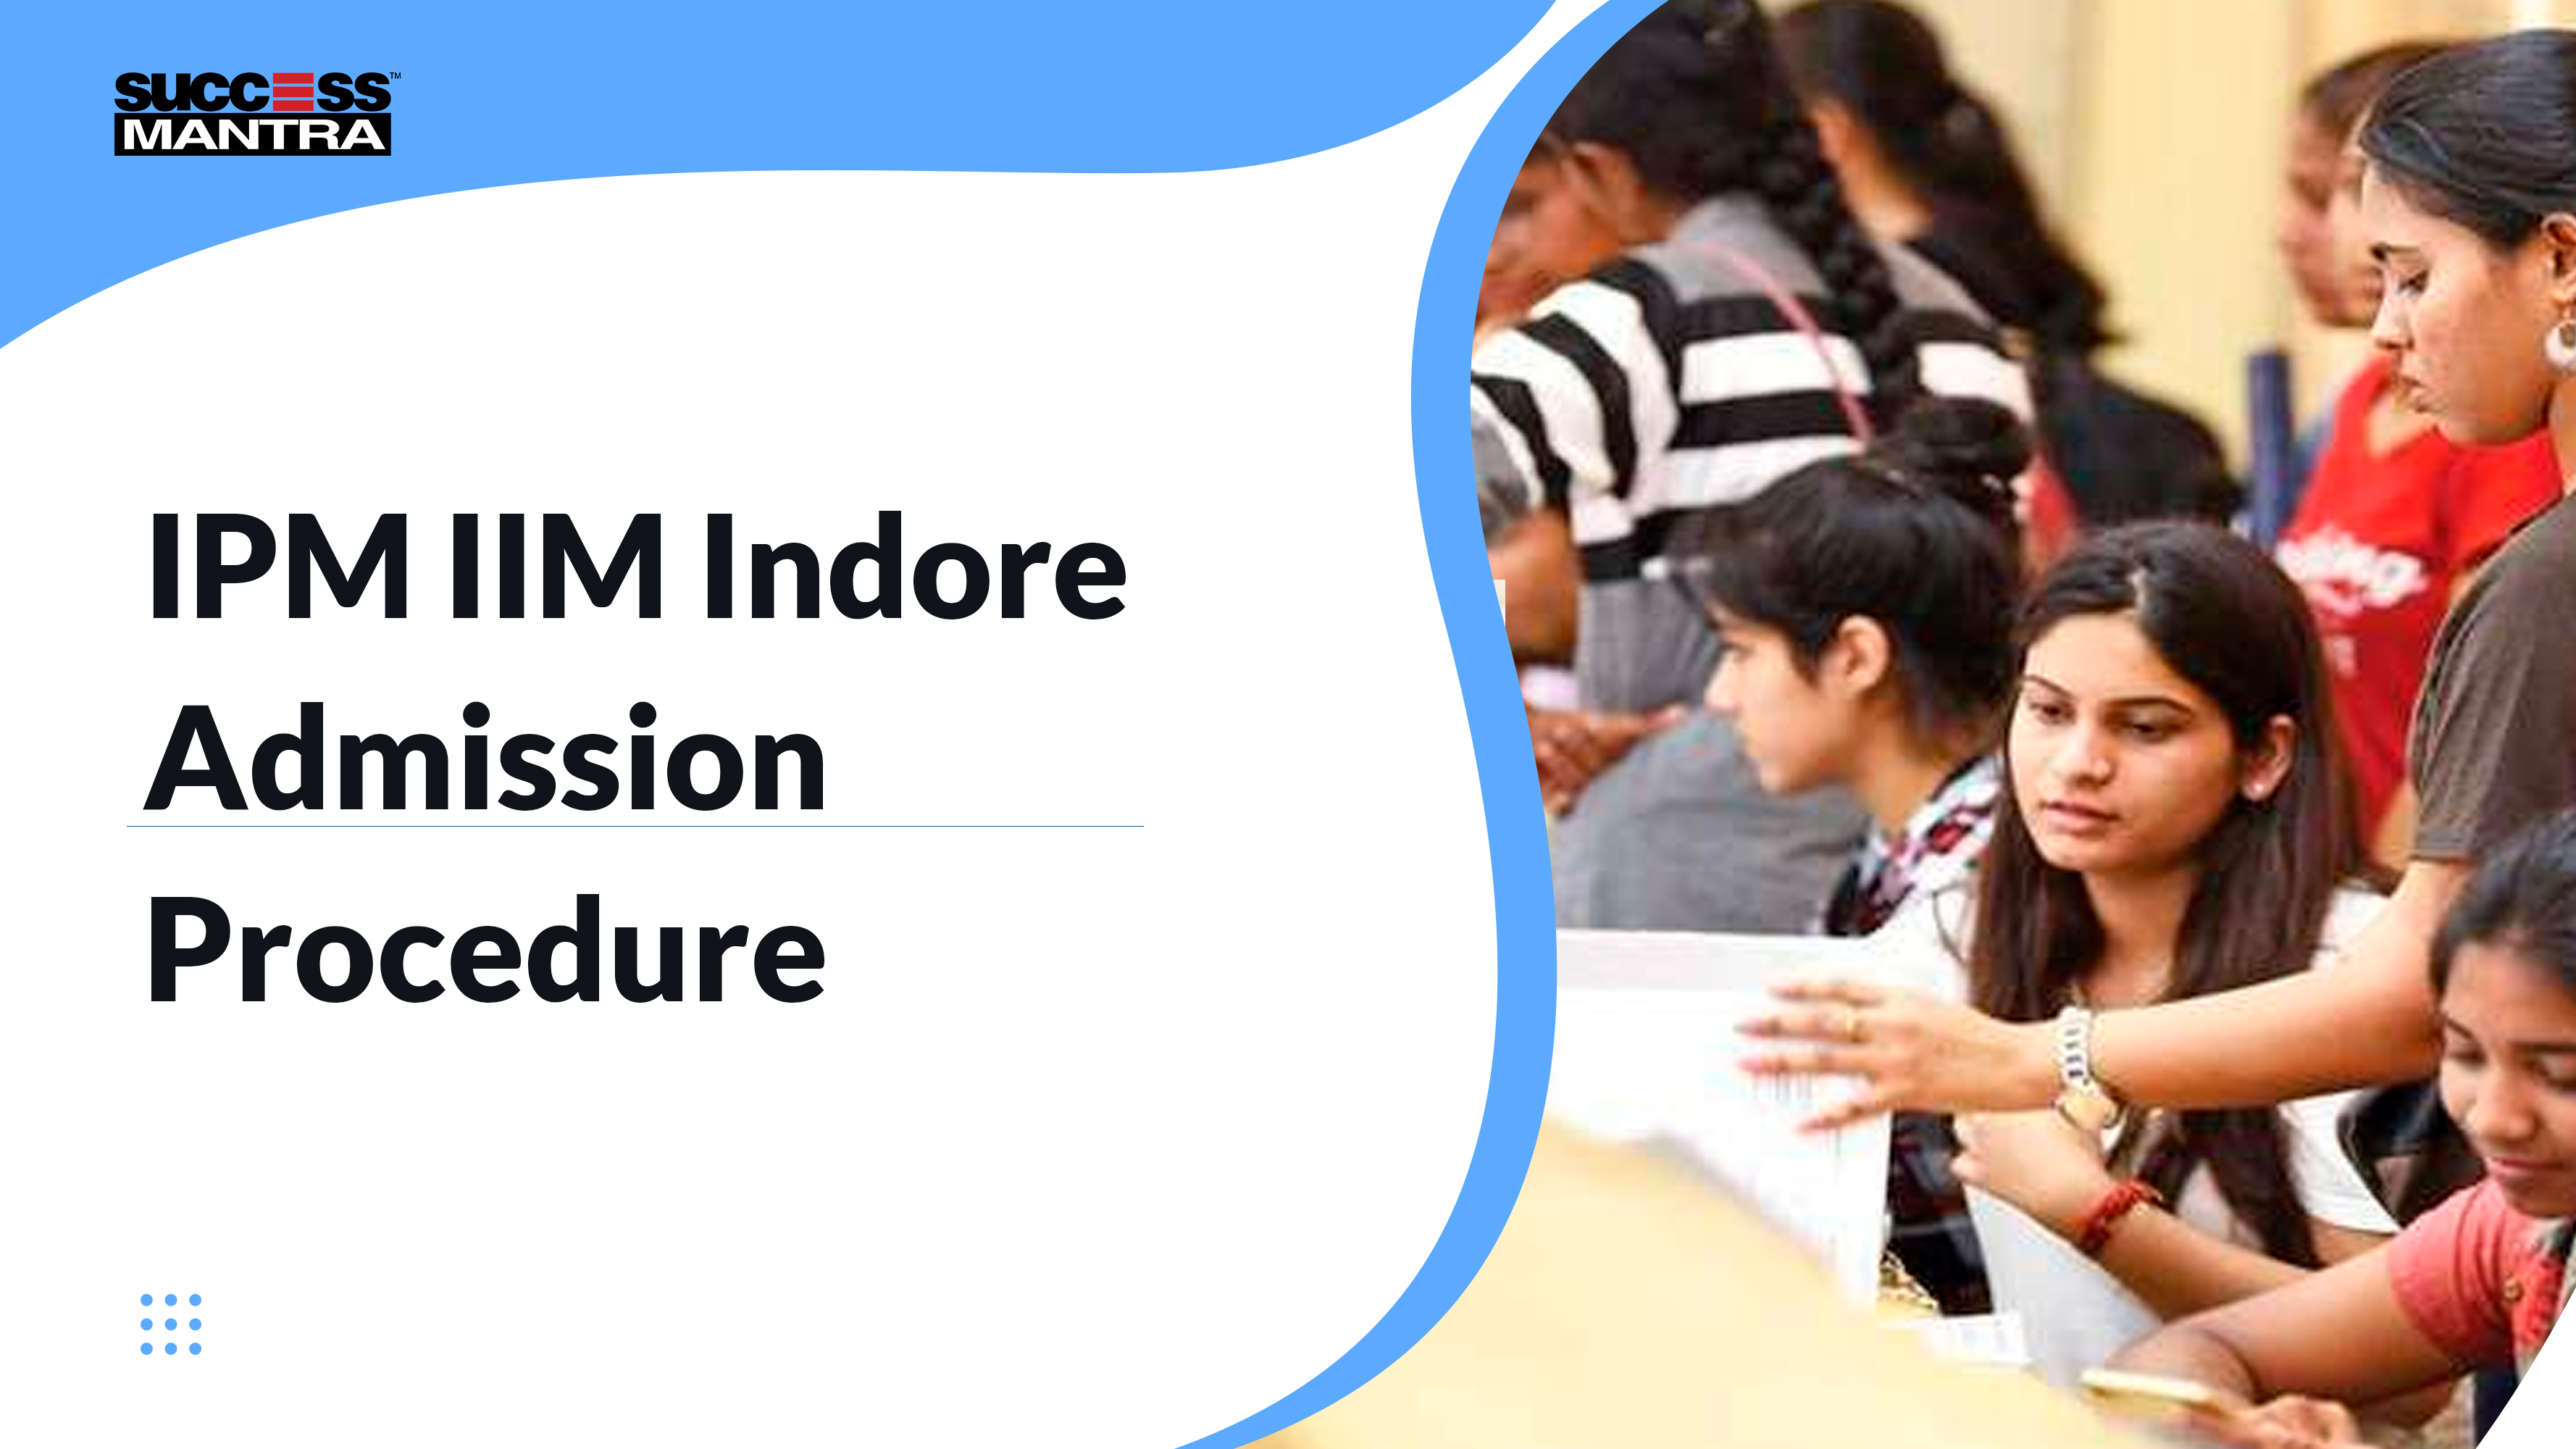 IPM IIM Indore Admission Procedure, Success Mantra Coaching Institute, Best Coaching Institute For BBA Located In GTB Nagar Delhi 